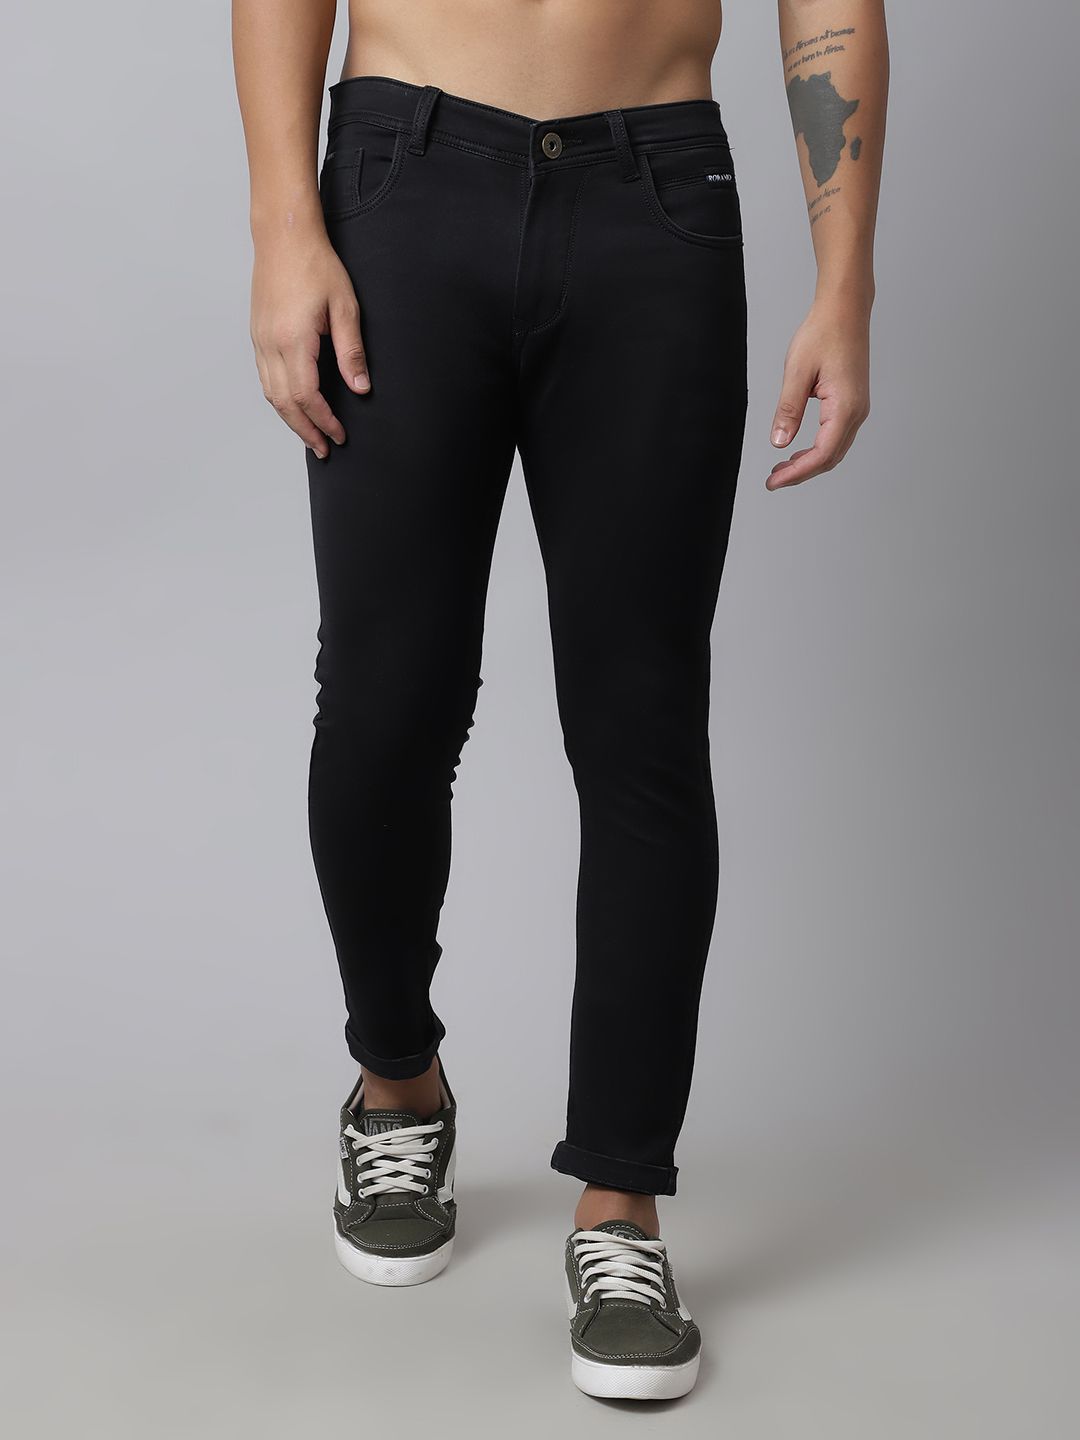     			Rodamo Slim Fit Basic Men's Jeans - Black ( Pack of 1 )